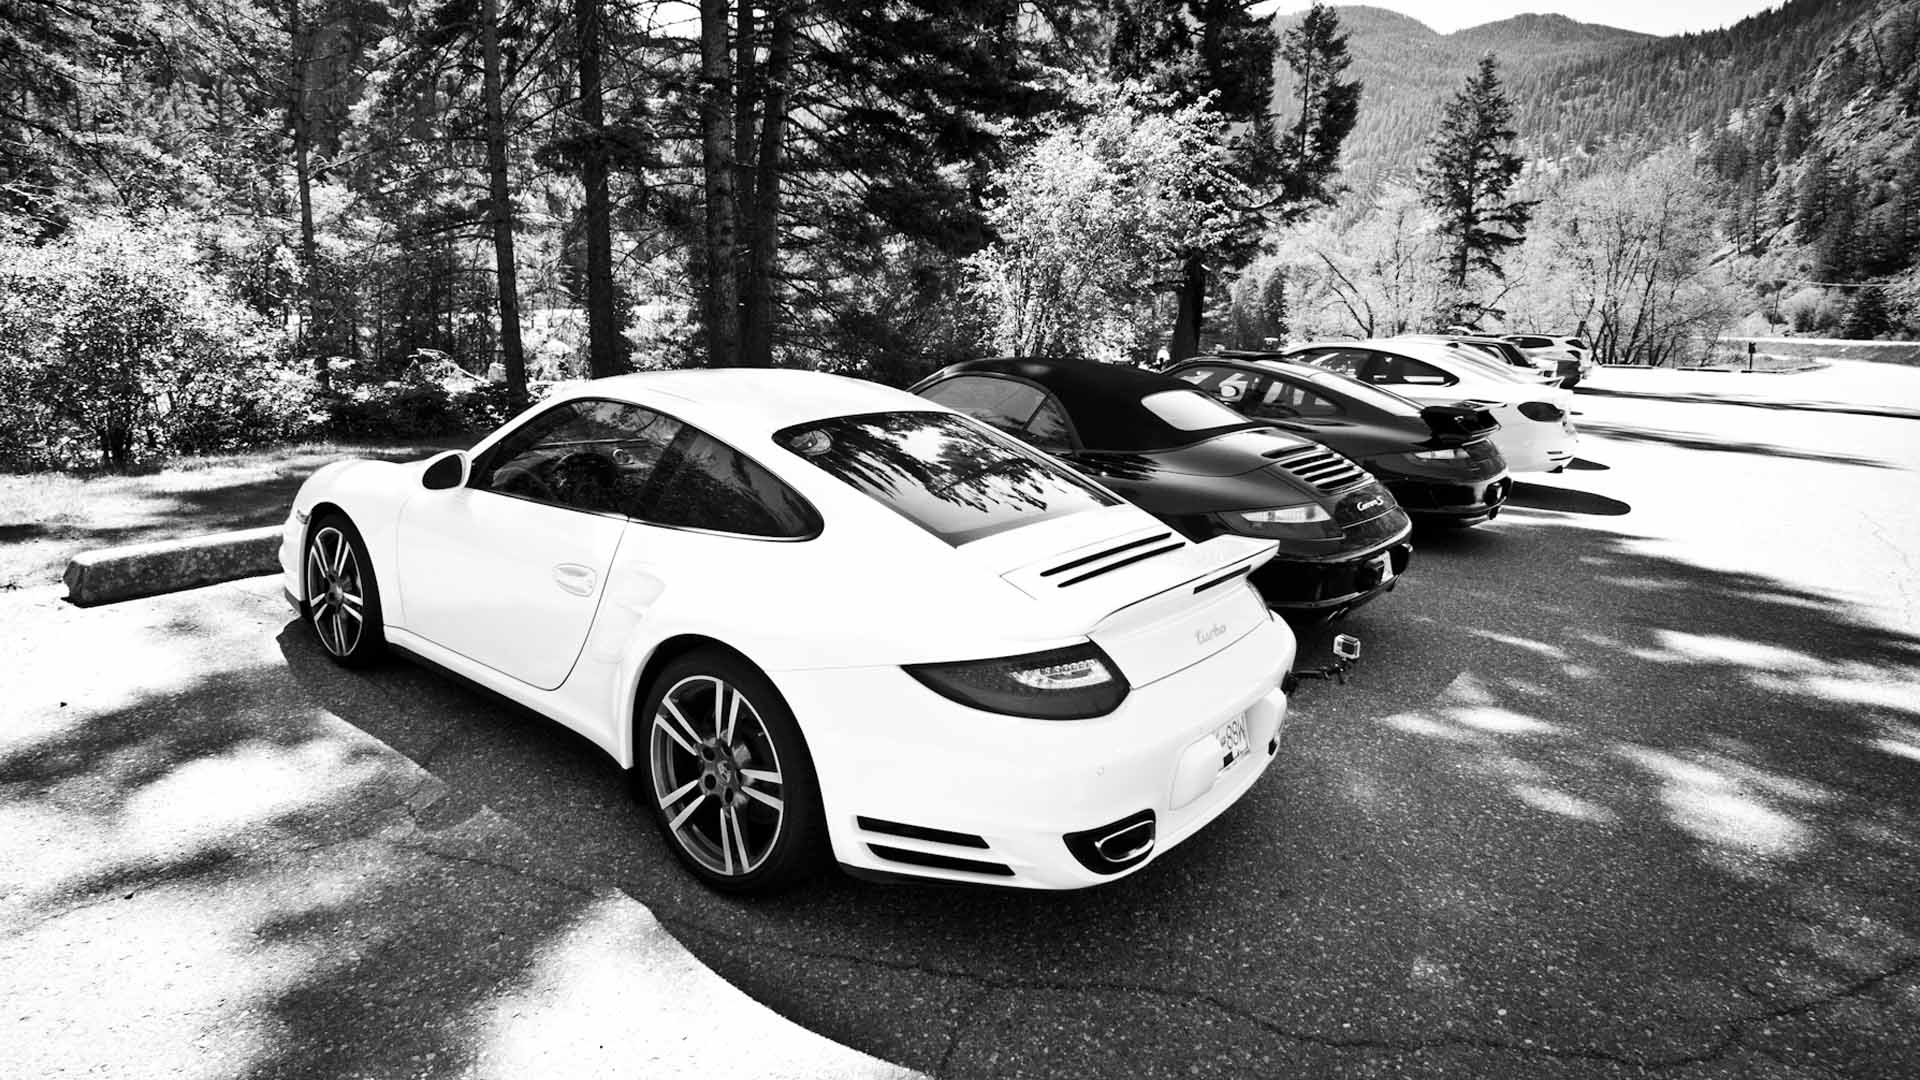 Porsches parked together